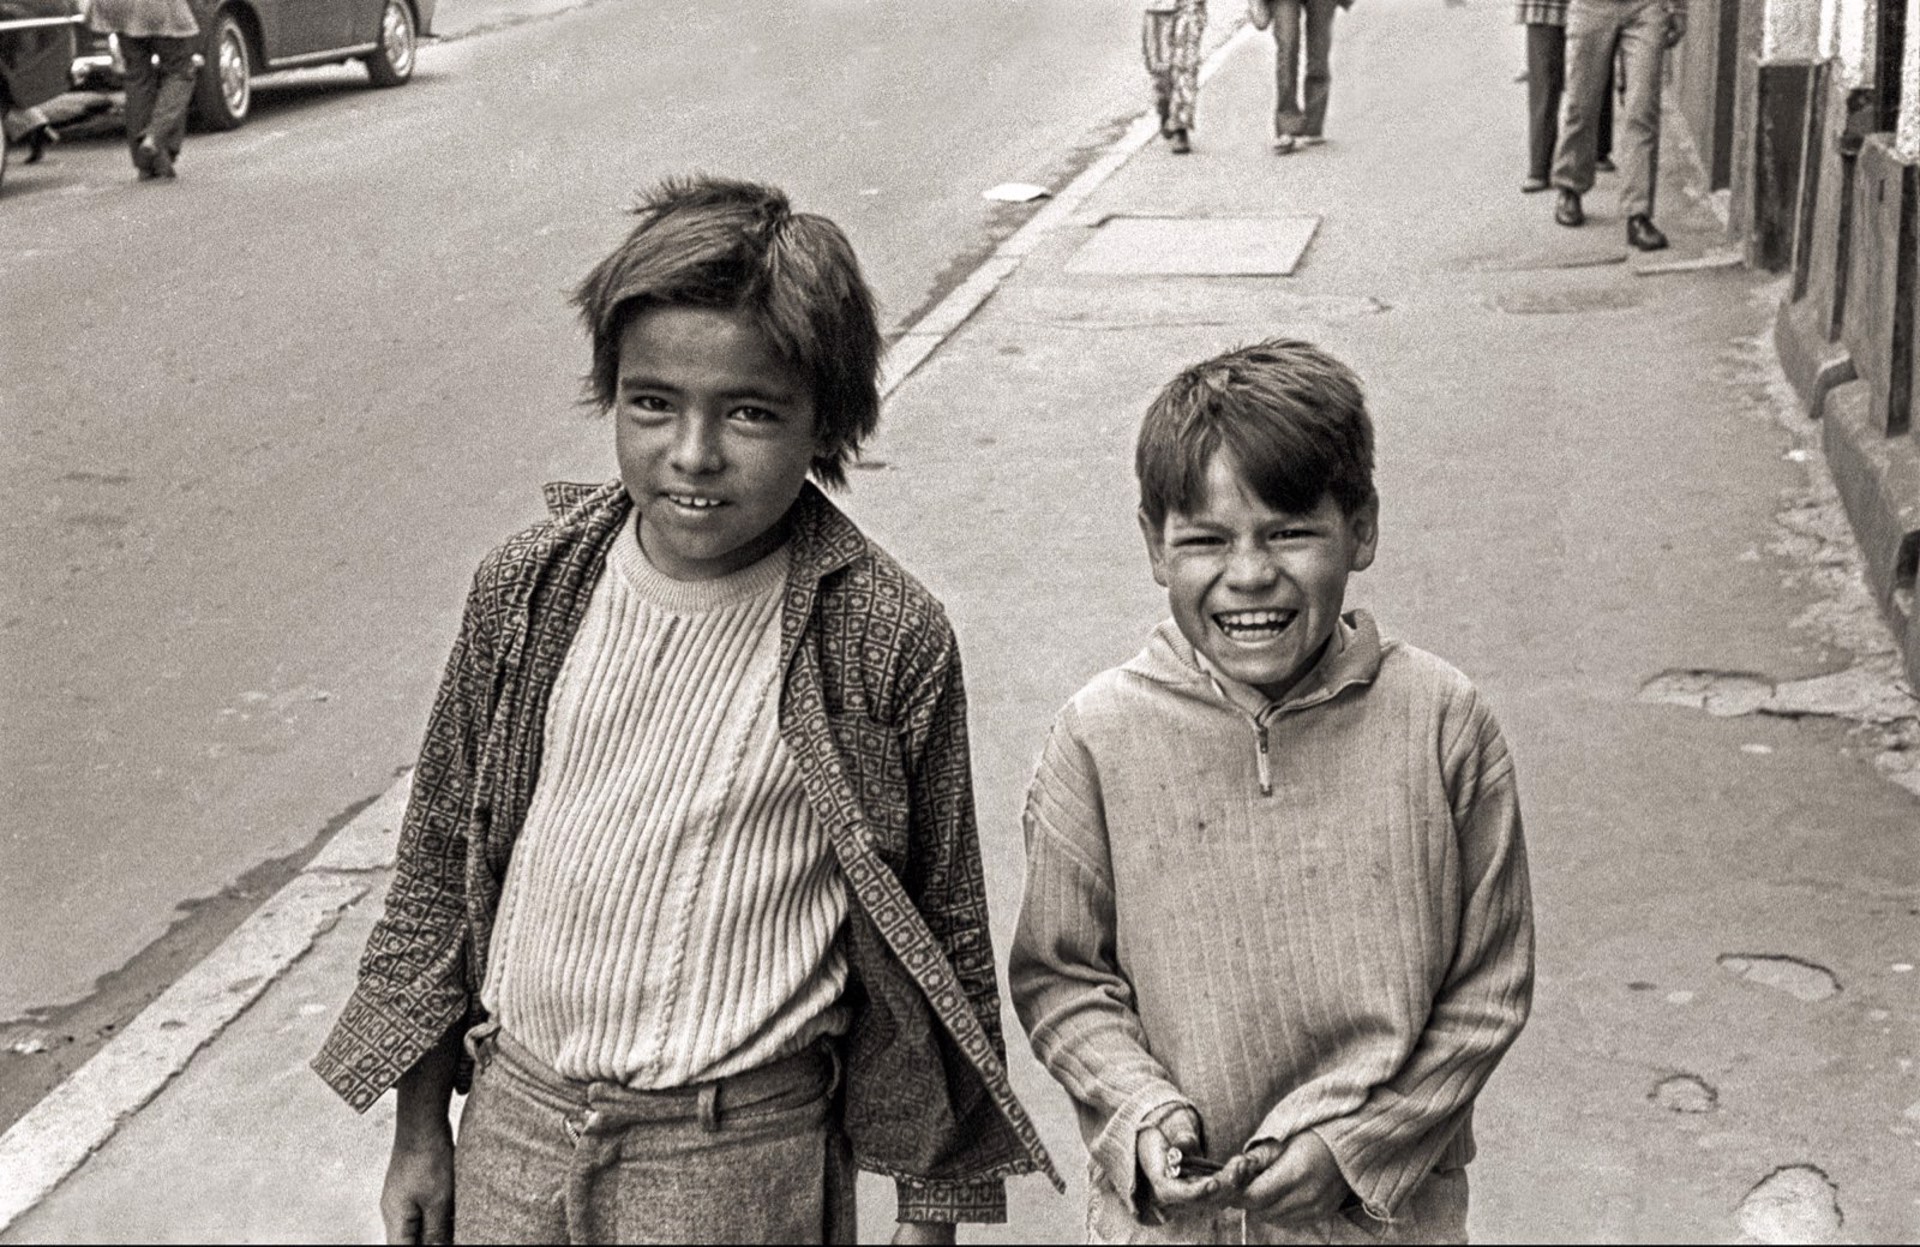 Smiling Street Kid, Unframed (005) by Jack Dempsey